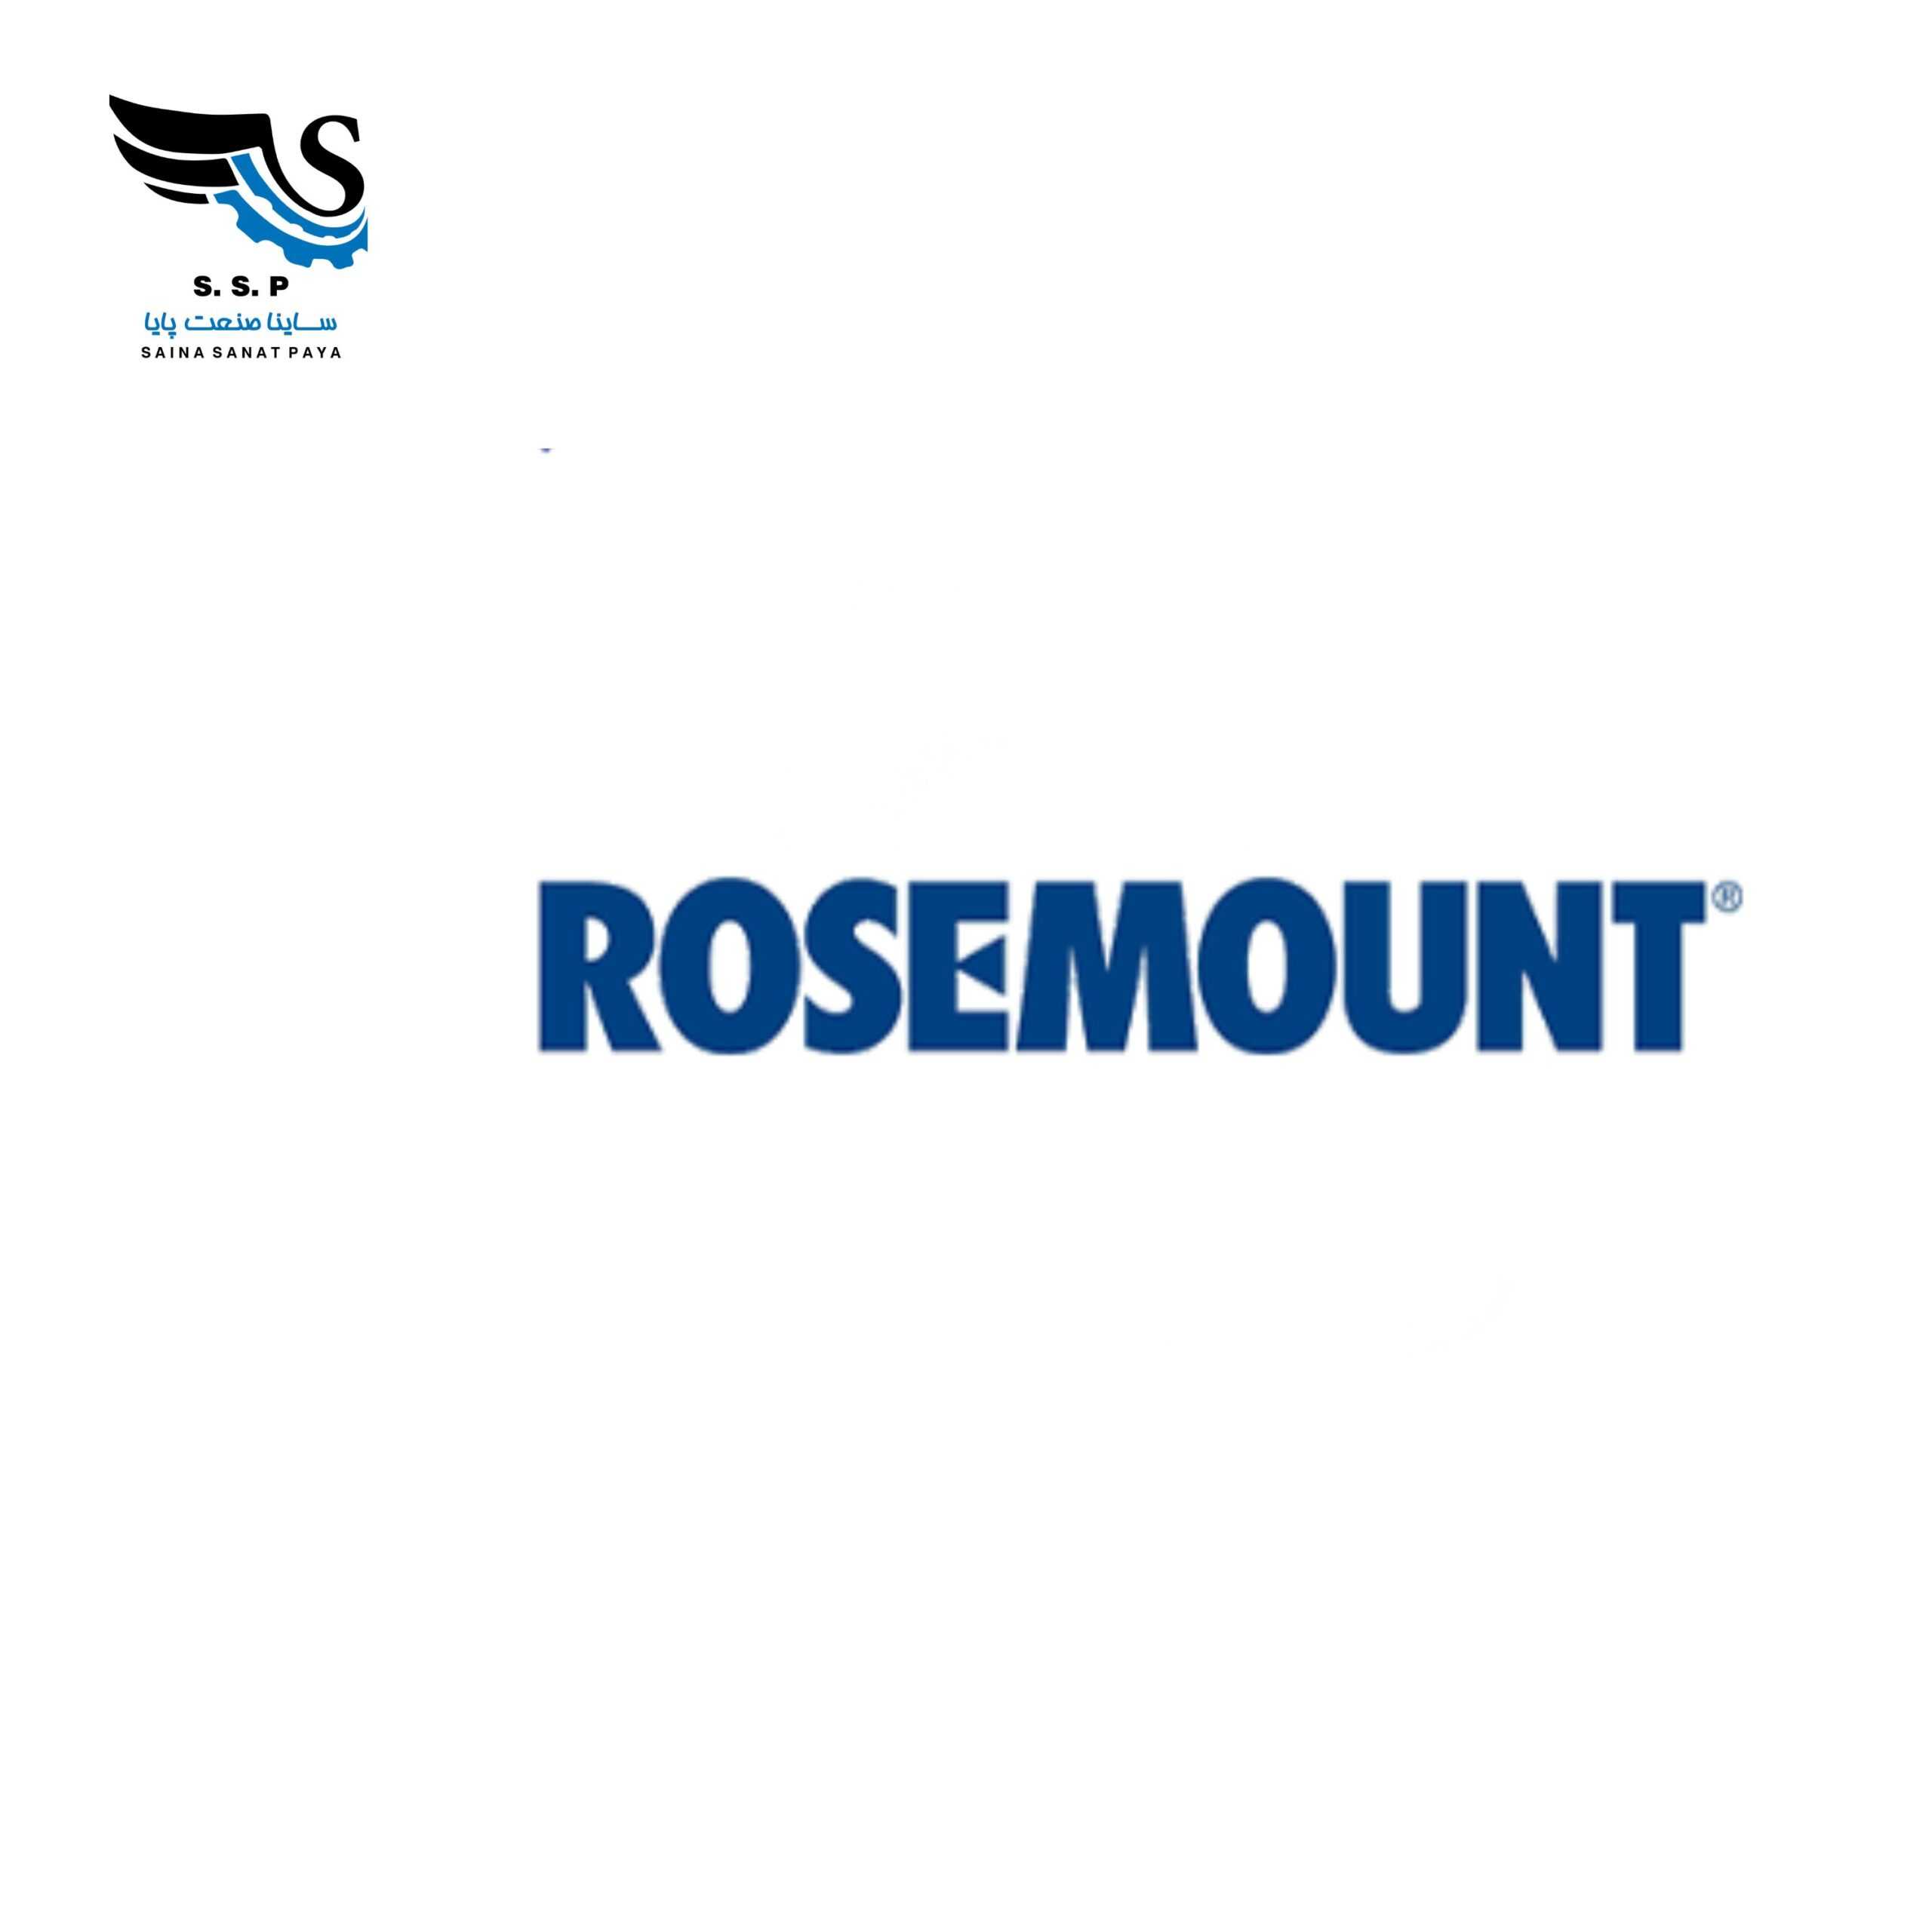 rosemount brand